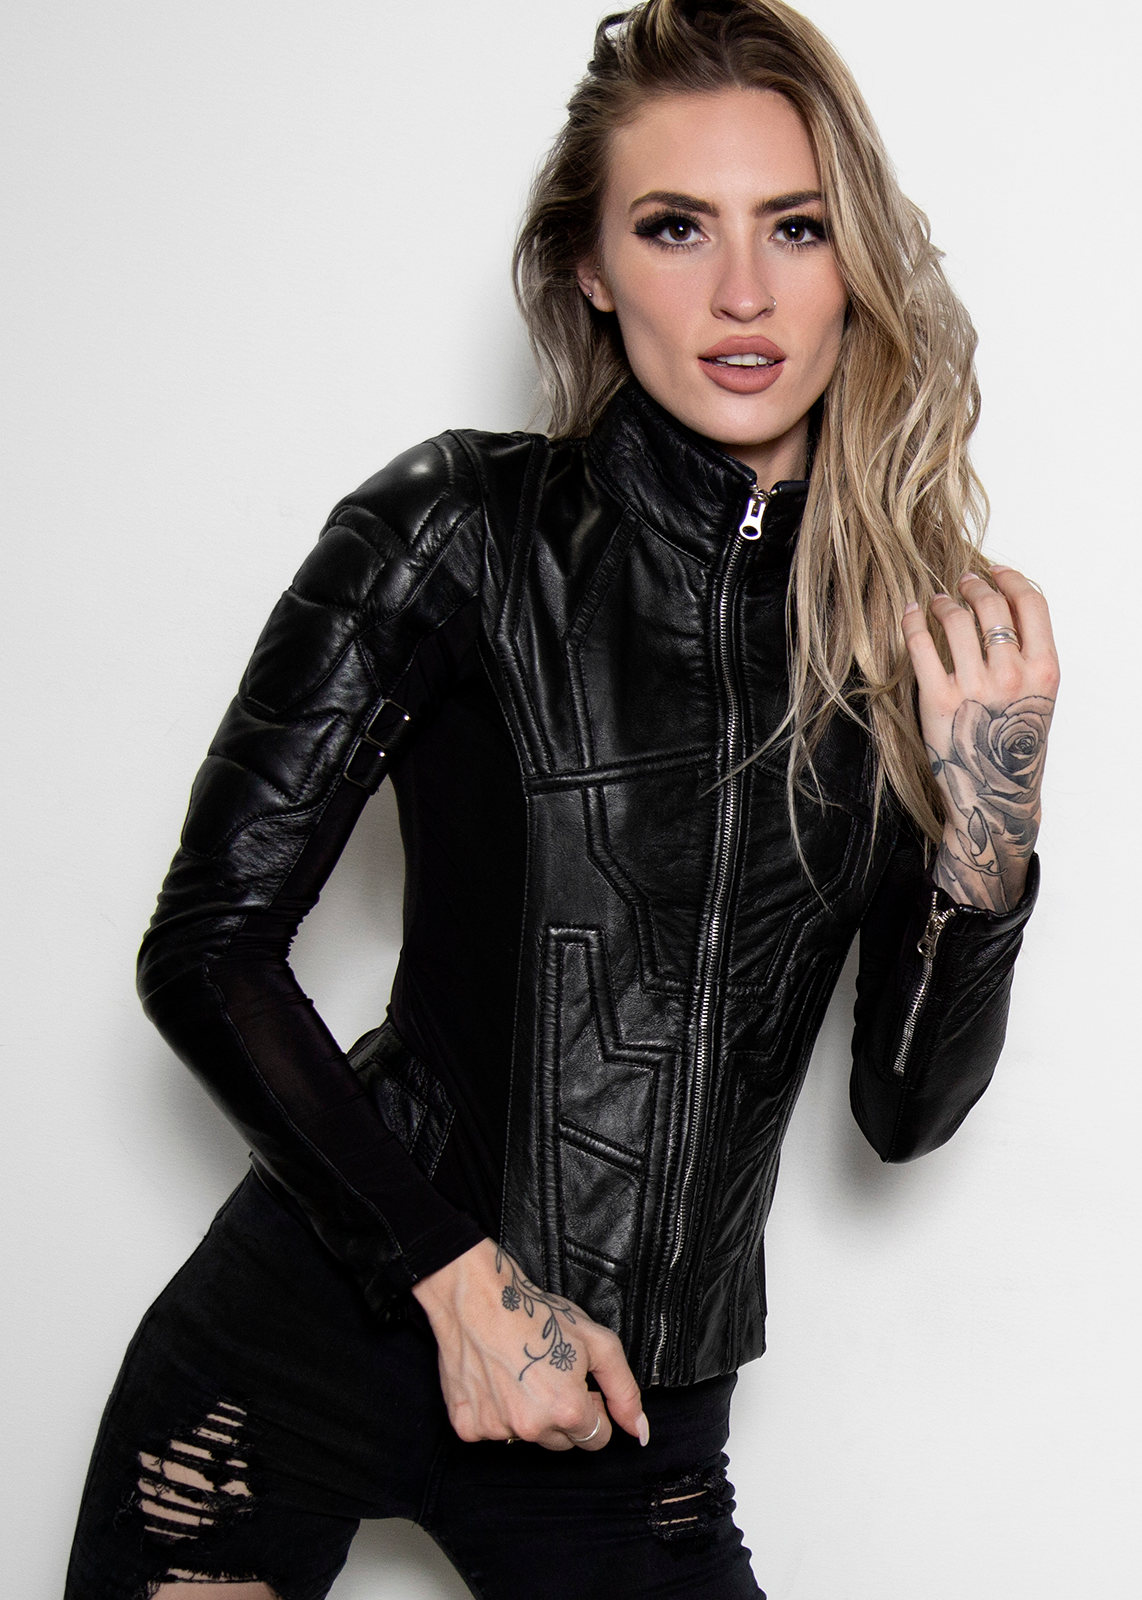 black widow Natasha Romanoff black leather suit cosplay